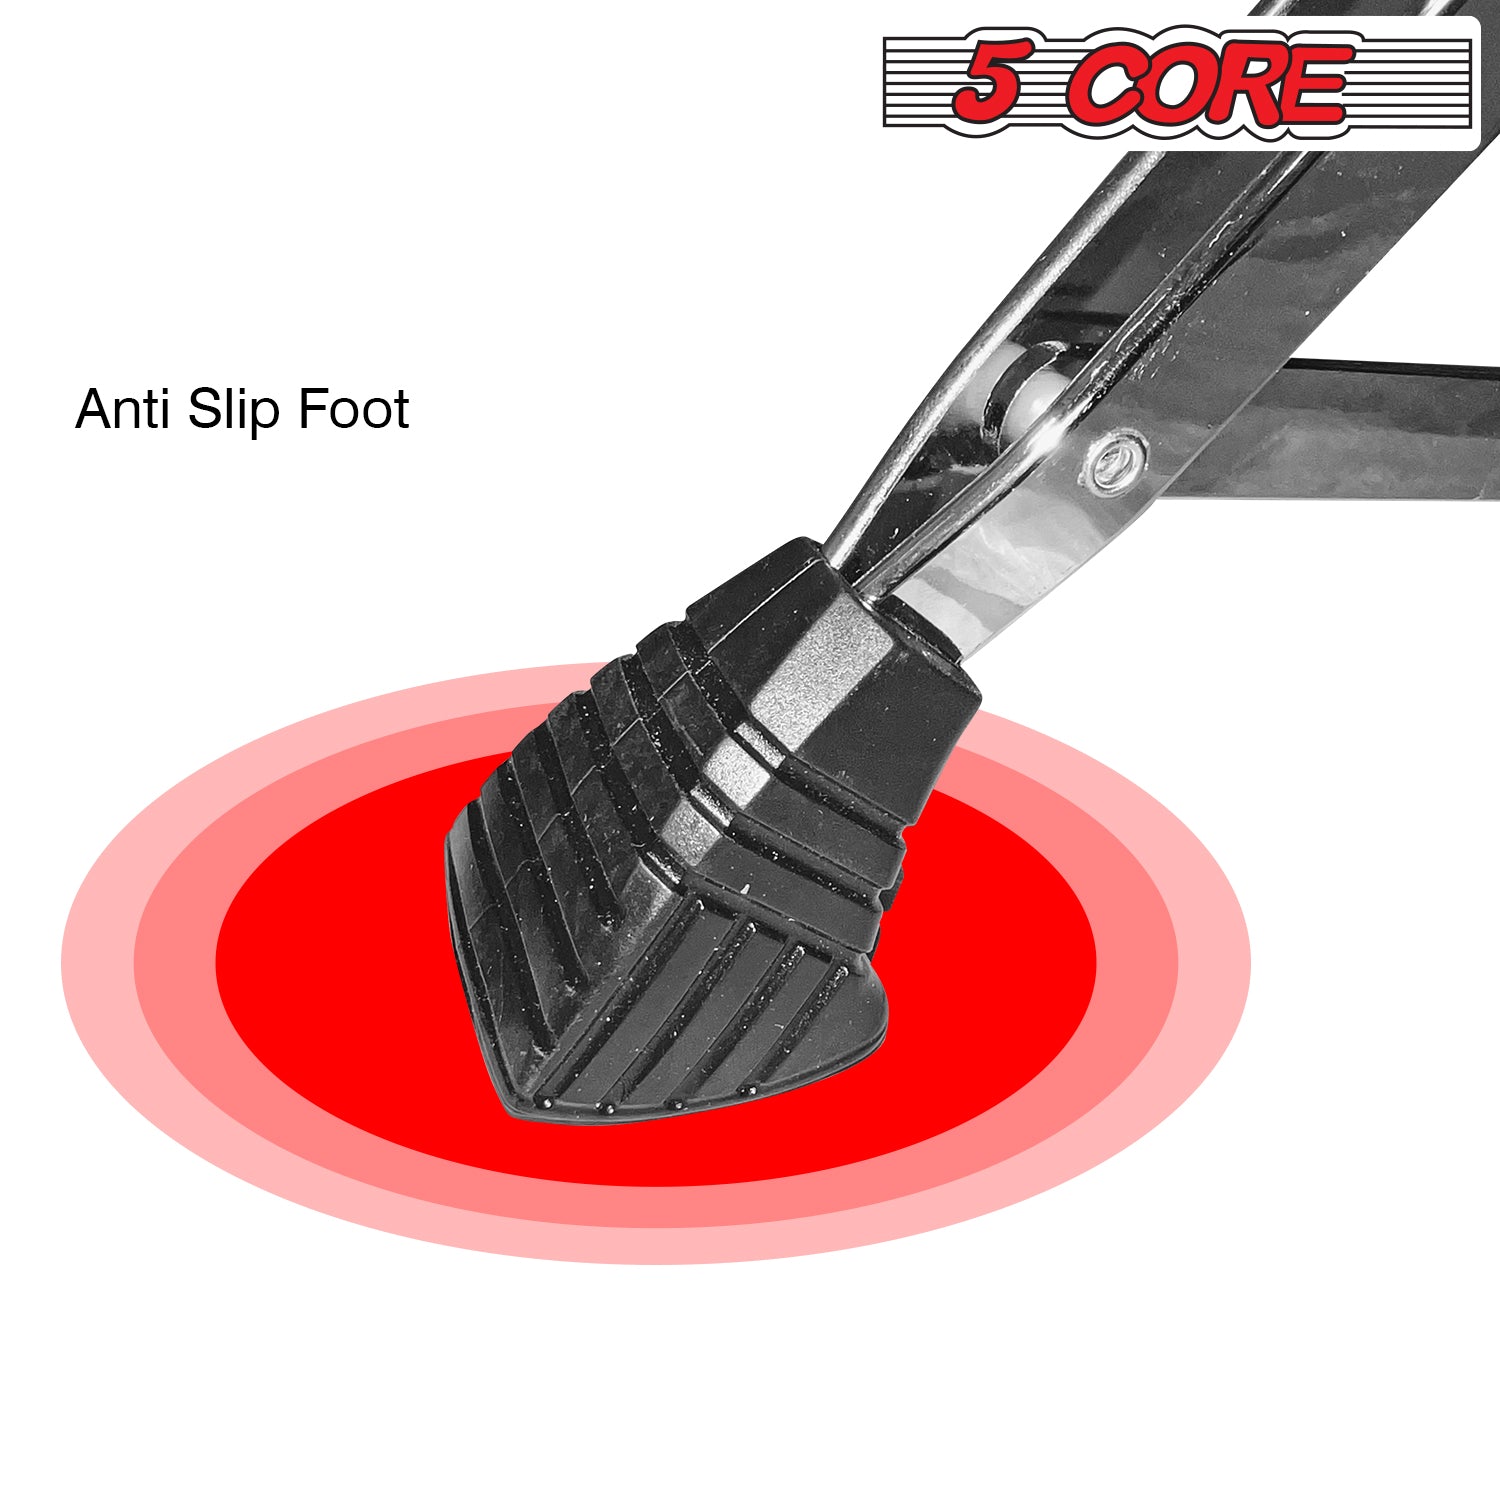 anti slip foot